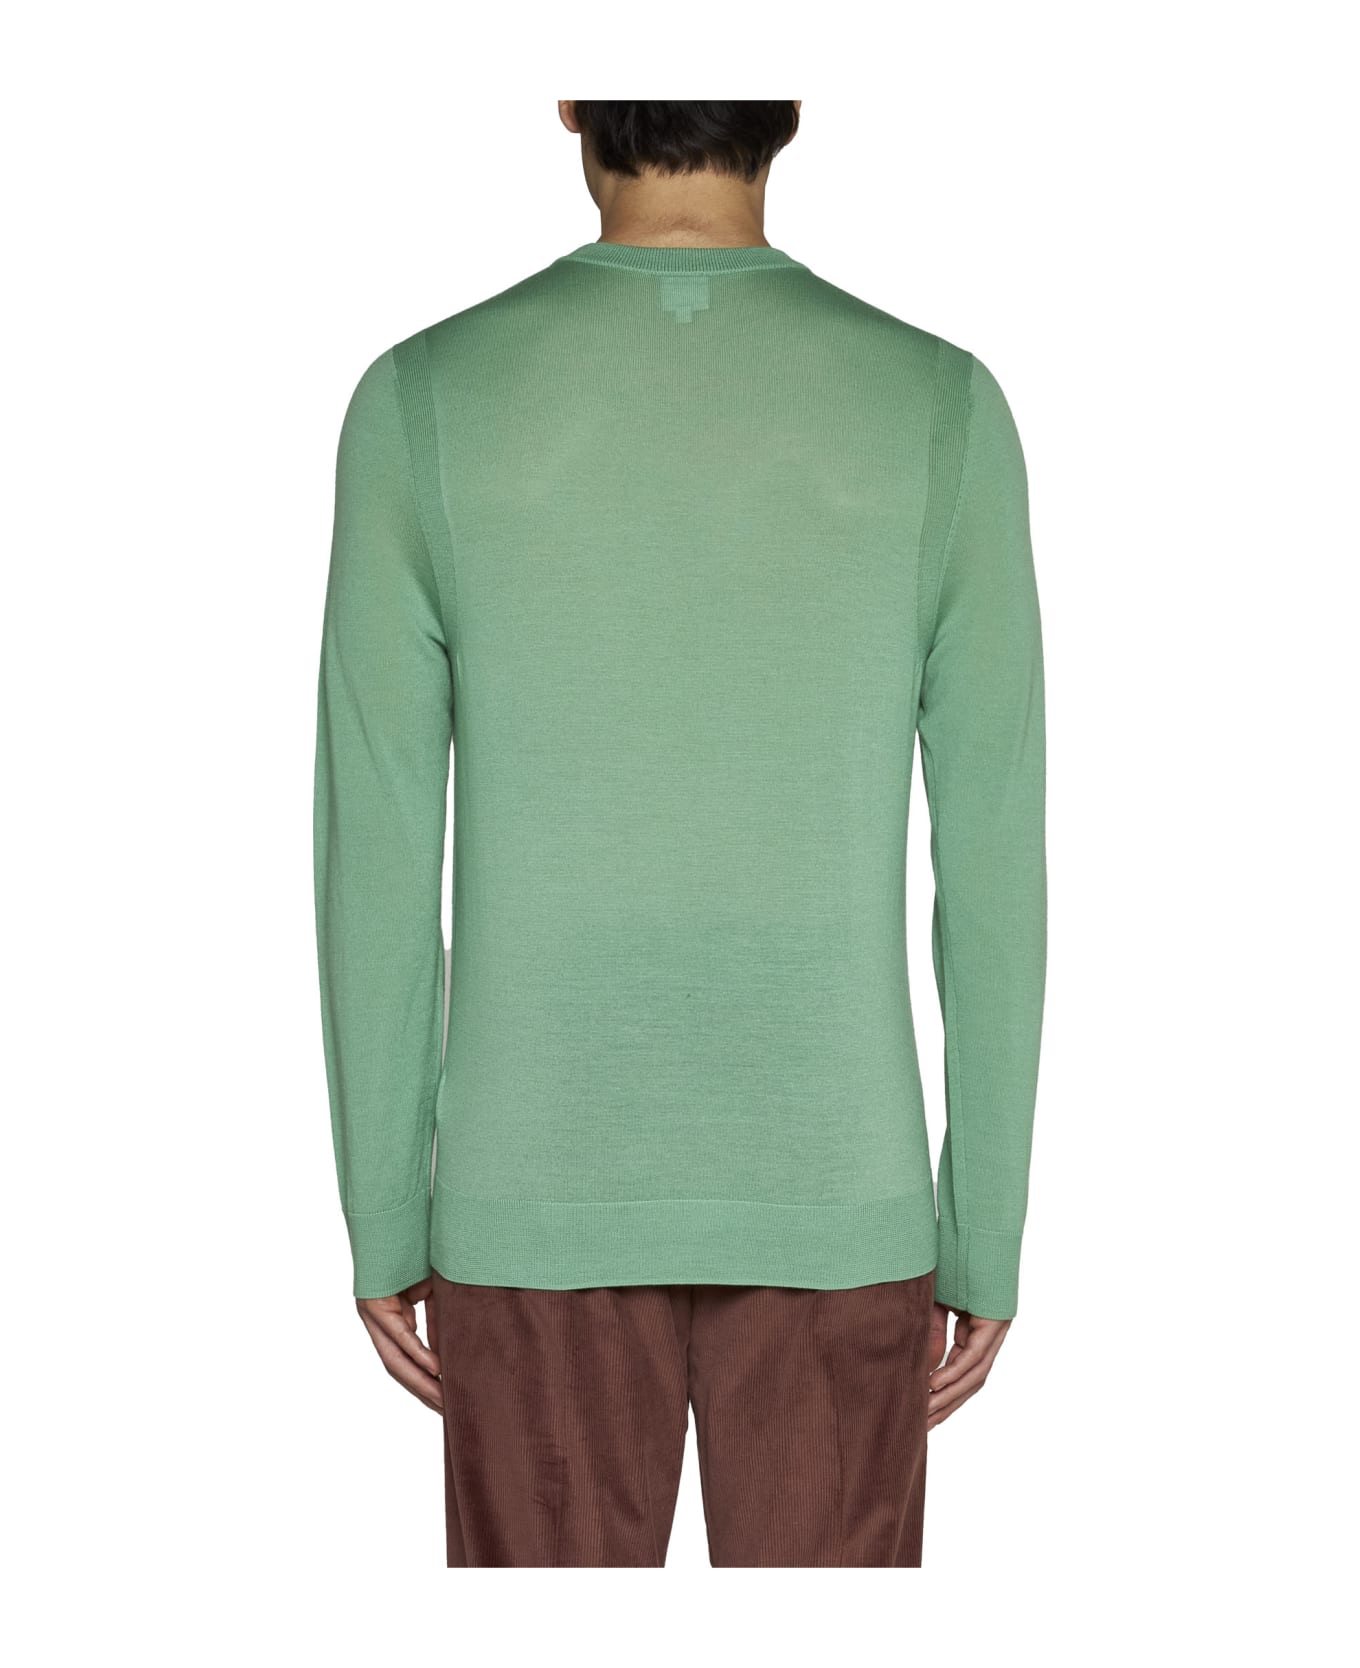 Paul Smith Sweater - Greens